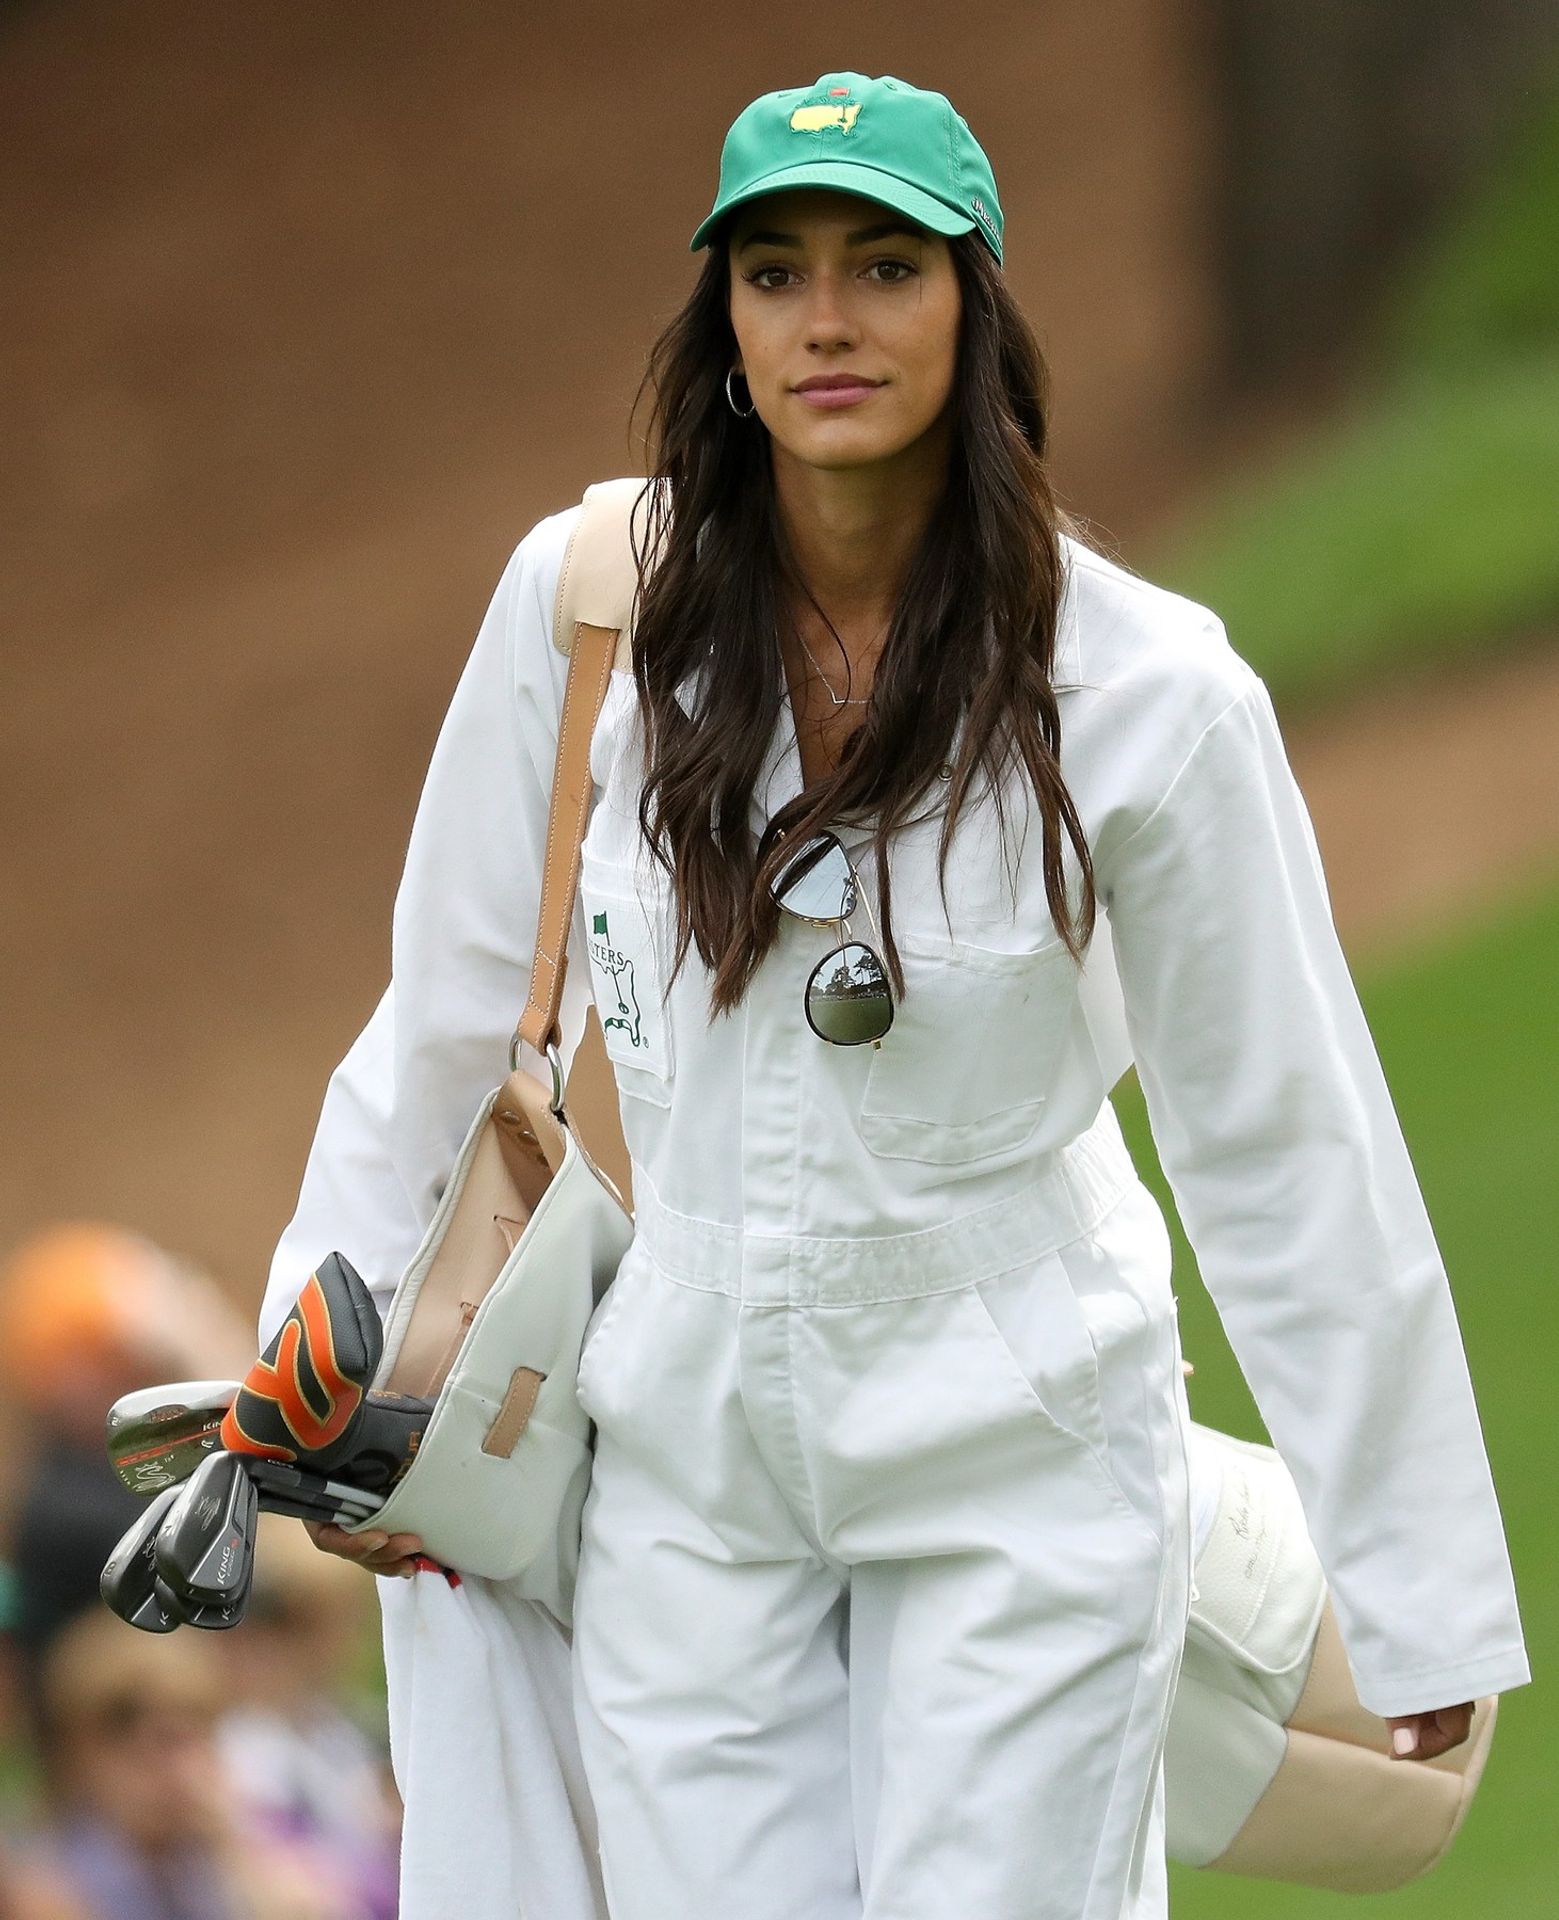 Skokanka o tyči Allison Stokkeová jako golfový caddie - Seznamte se! Americké tyčkařce krása zkazila kariéru (4/5)